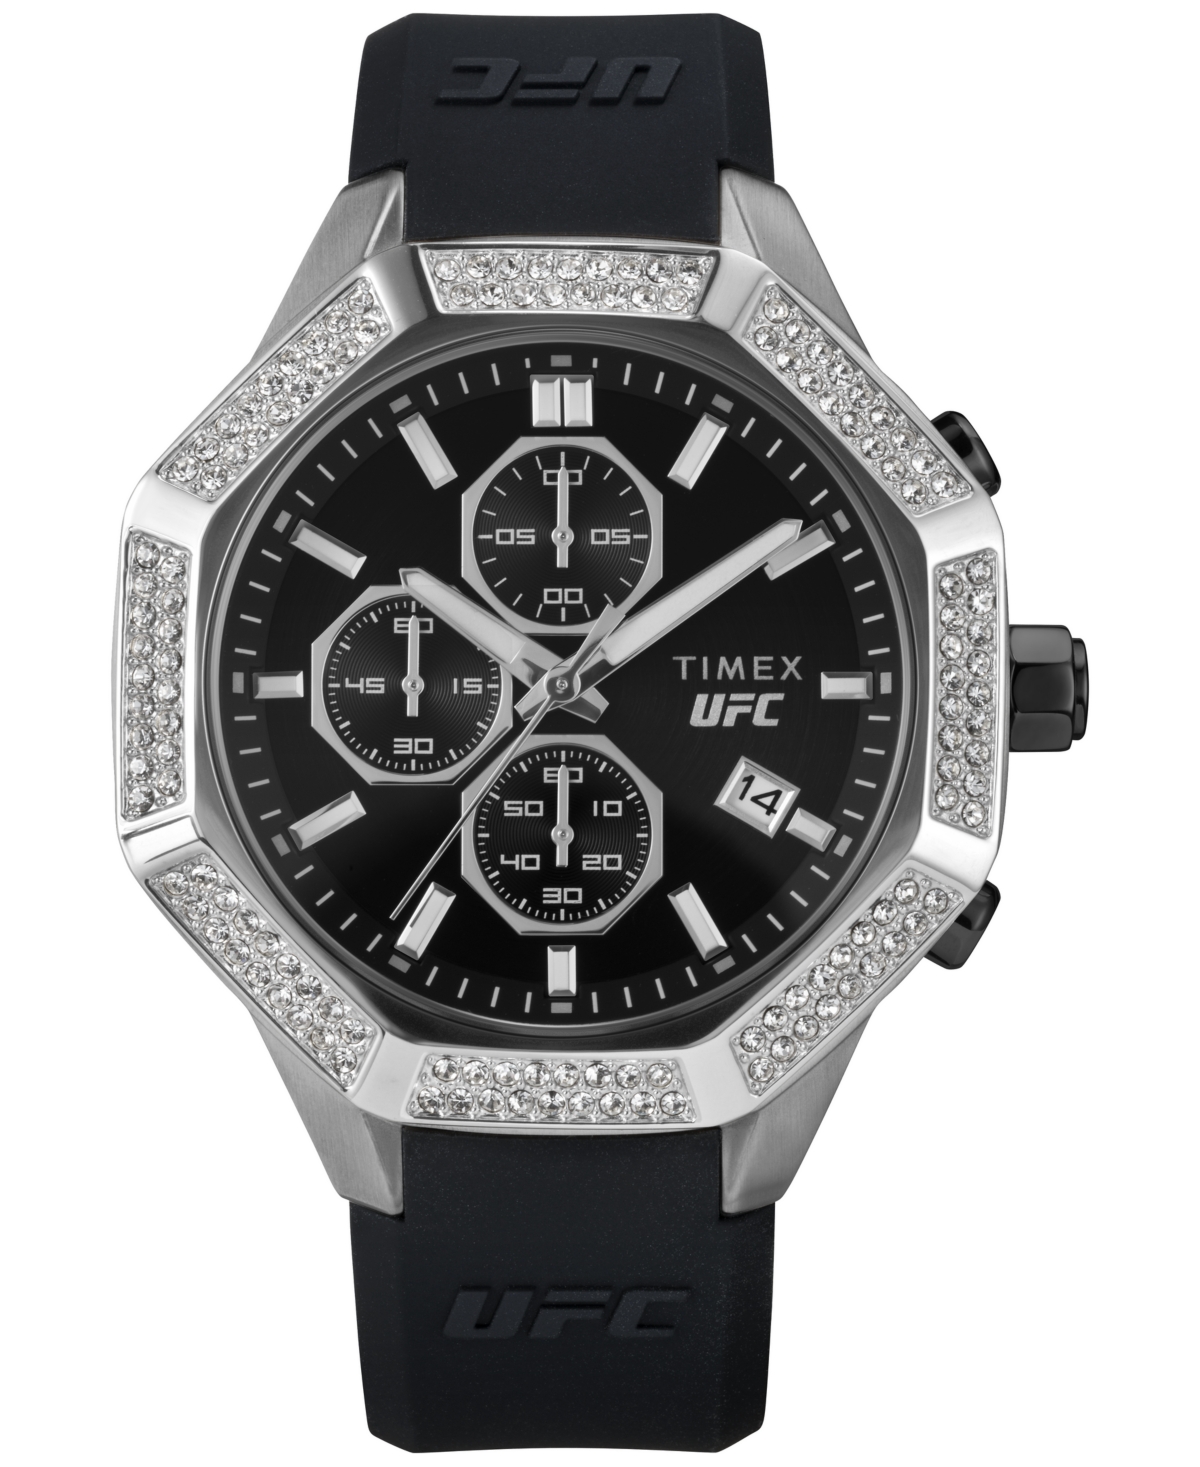 Unisex Ufc King Analog Black Silicone Strap 45mm Octagonal Watch - Black